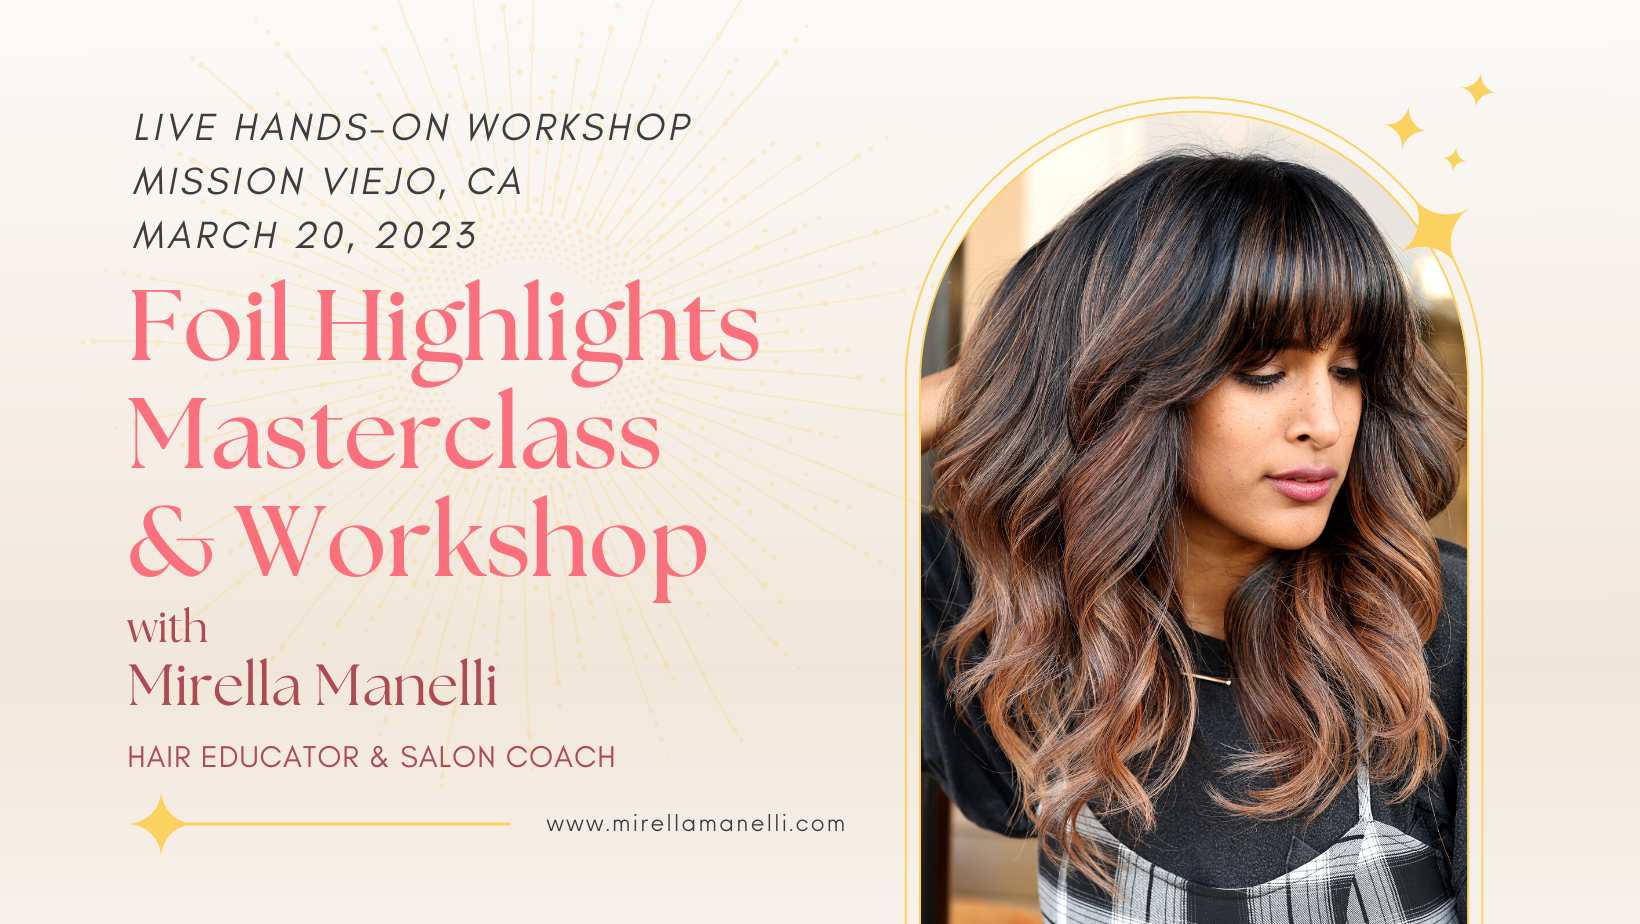 In-person Hair Education & Workshops - Mirella Manelli Hair Education